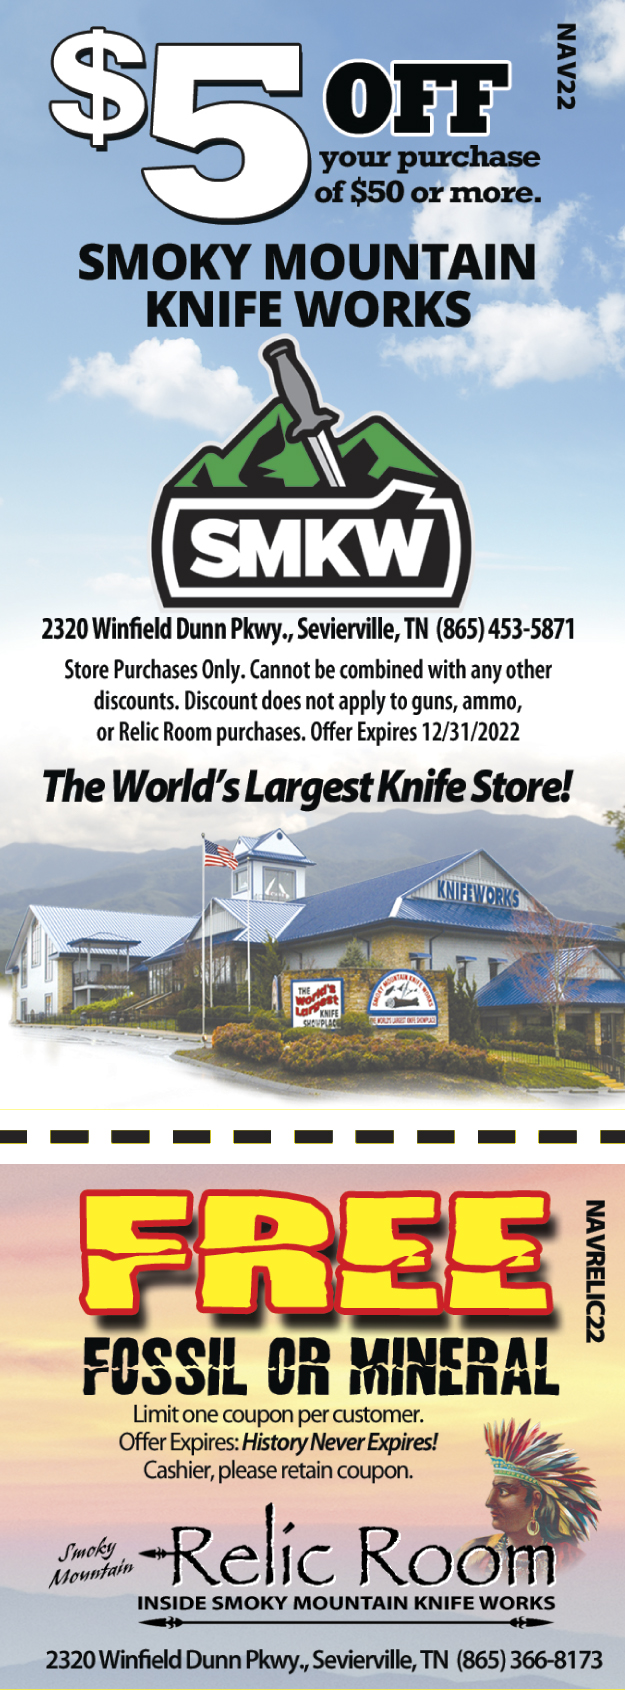 Smoky Mountain Knifeworks coupon